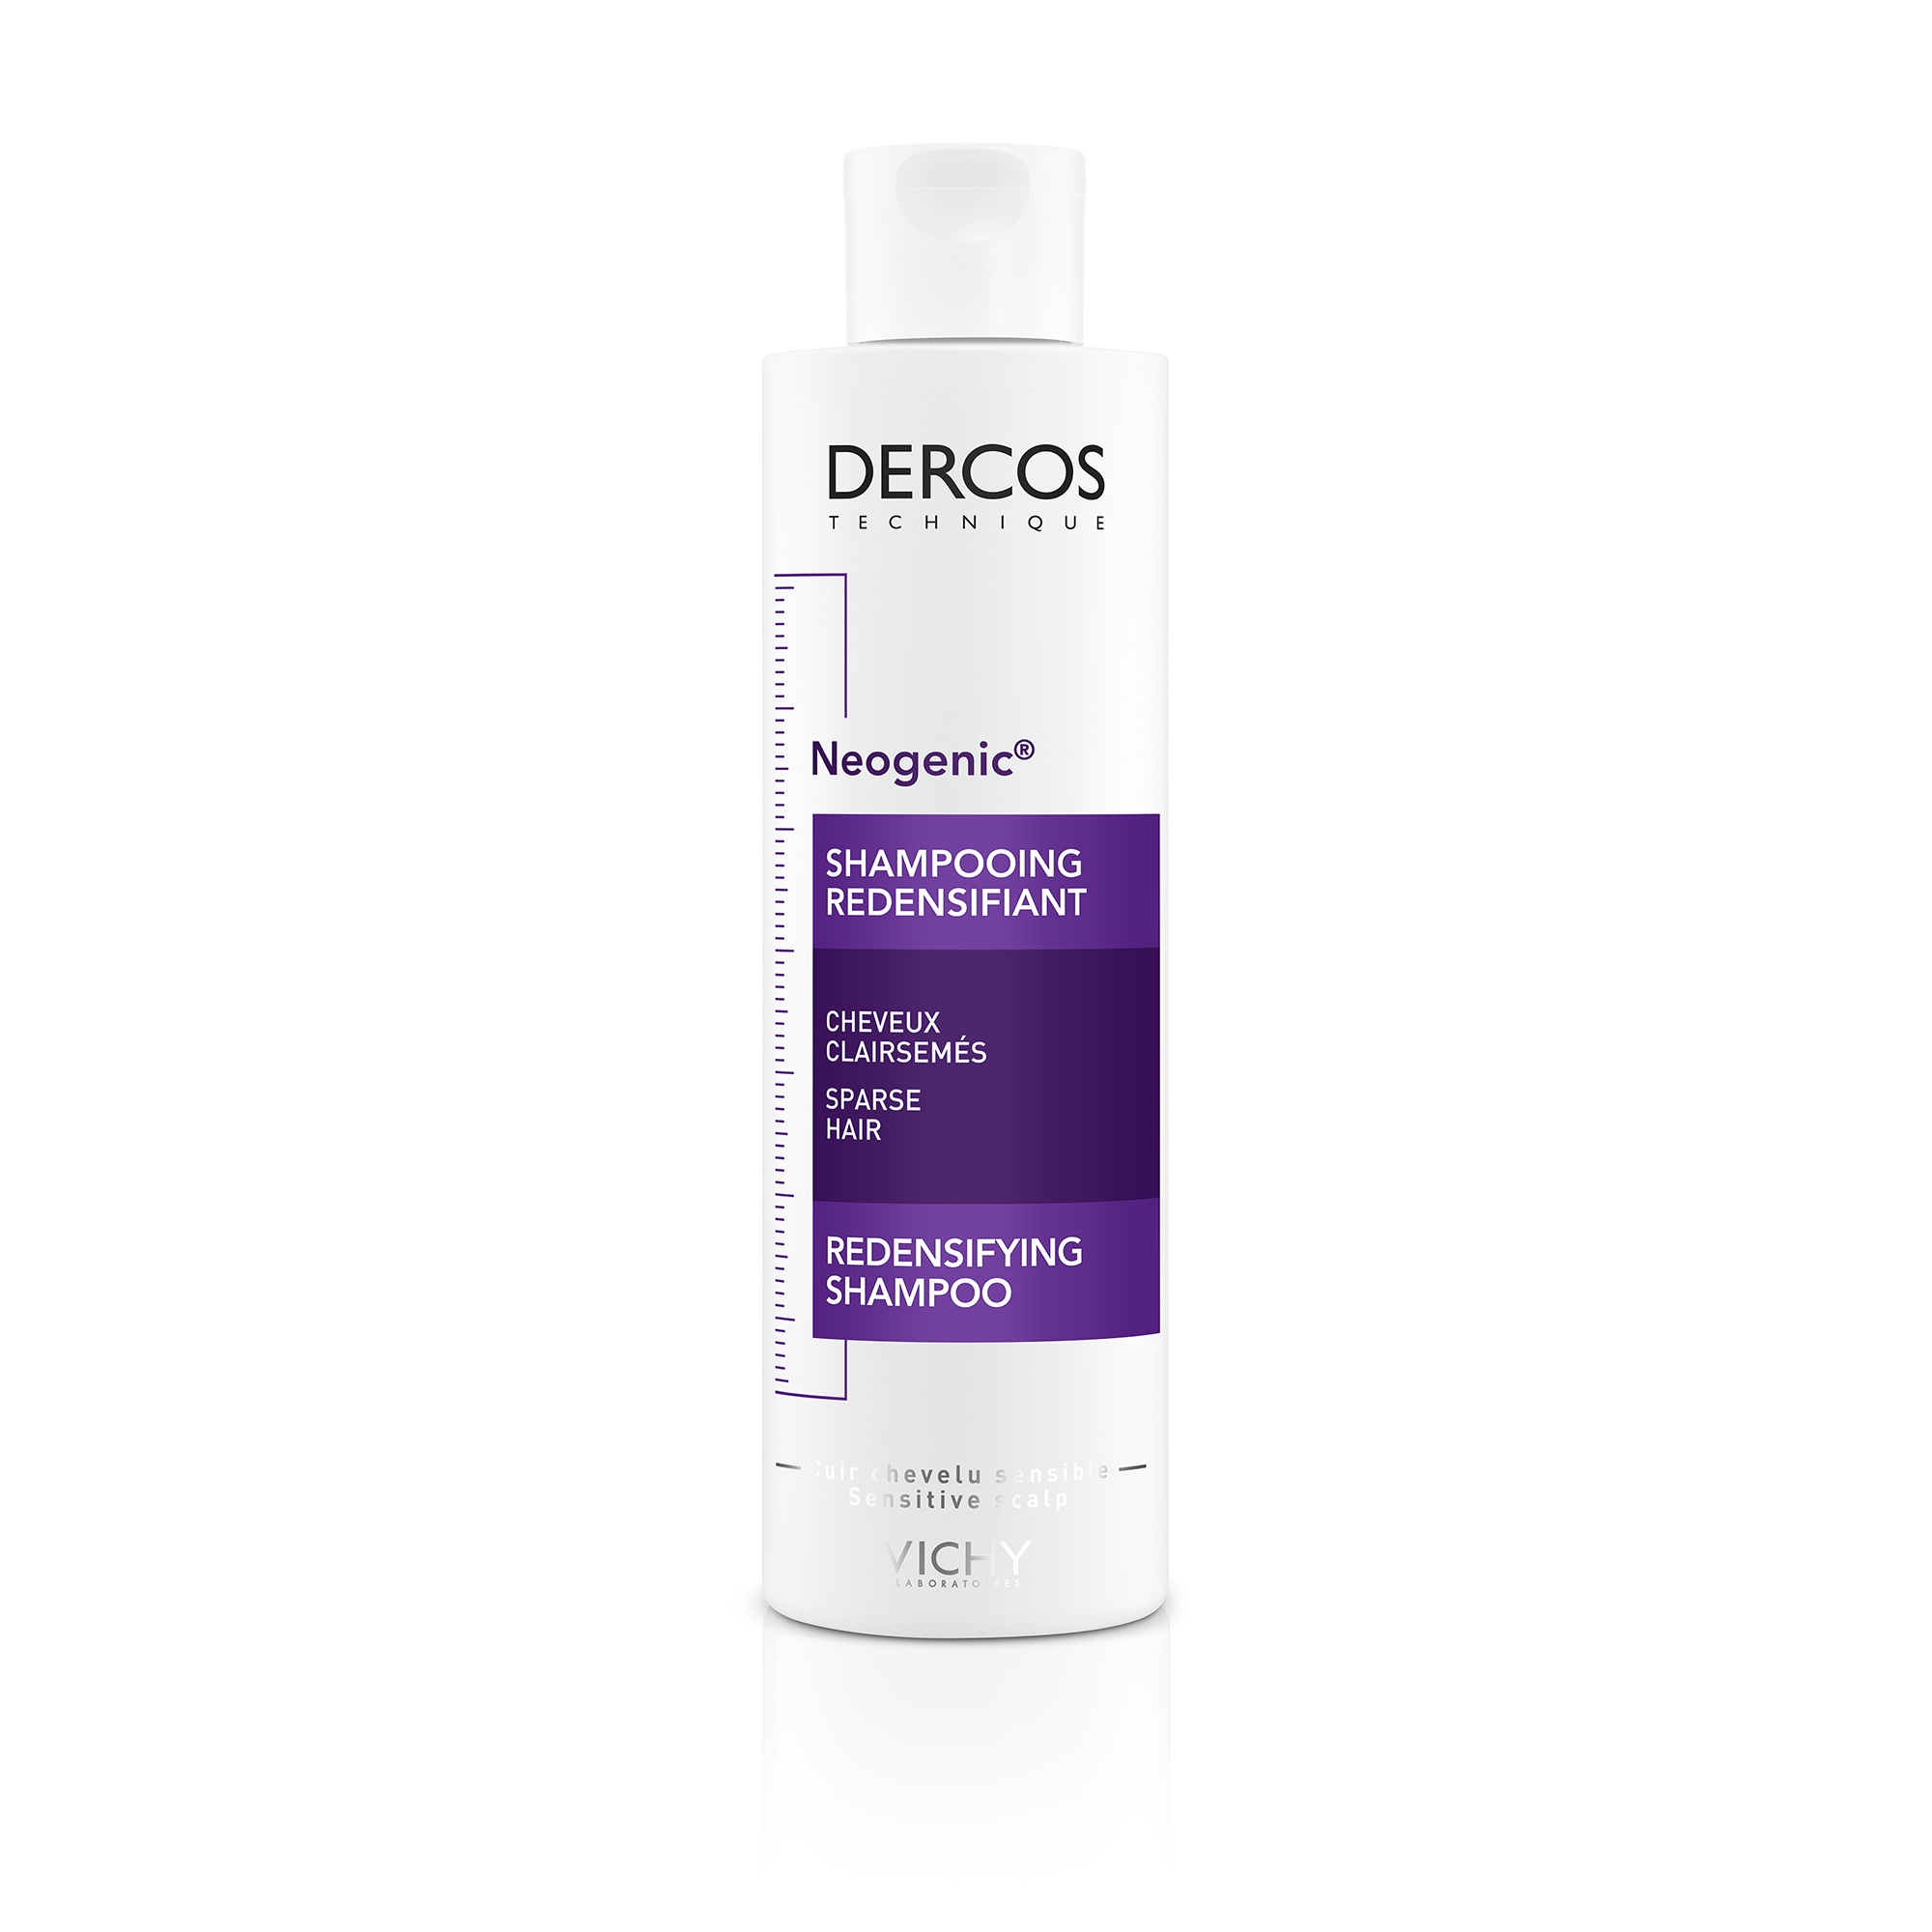 VICHY Dercos Şampon Neogenic Redensificator cu Stemoxidina®, 200ml 